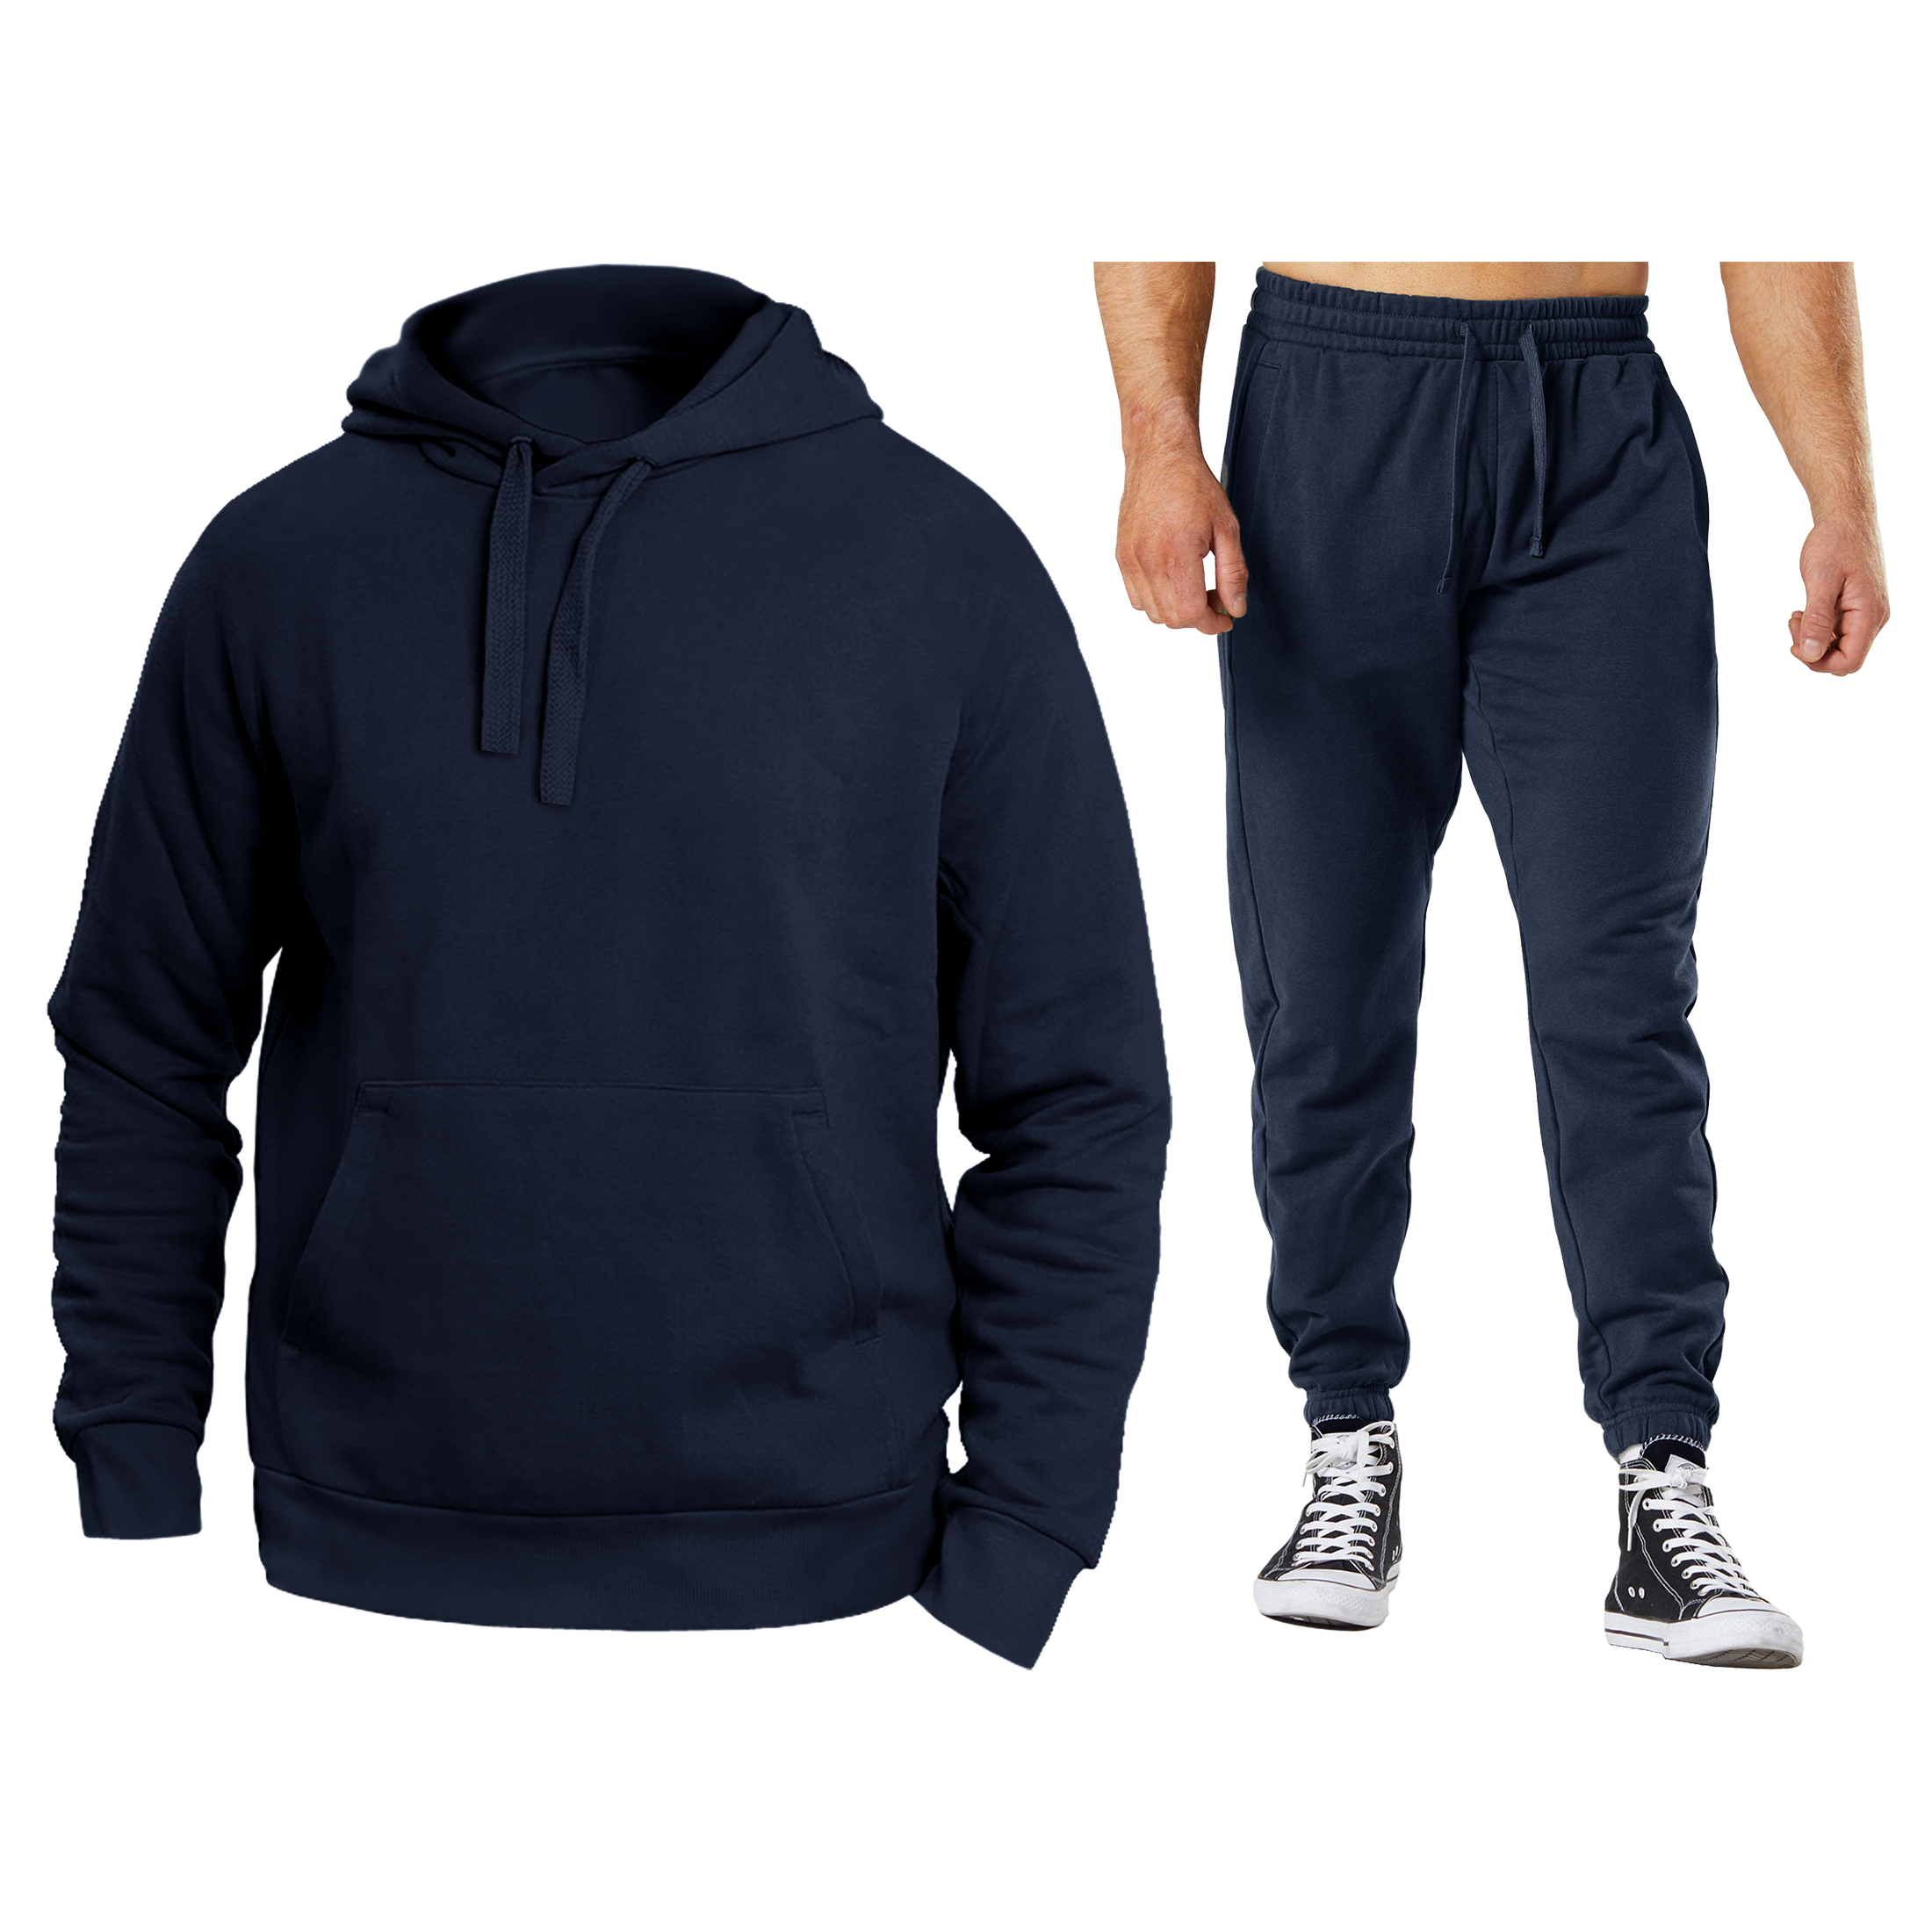 Men's Athletic Warm Jogging Pullover Active Sweatsuit - Black, Medium